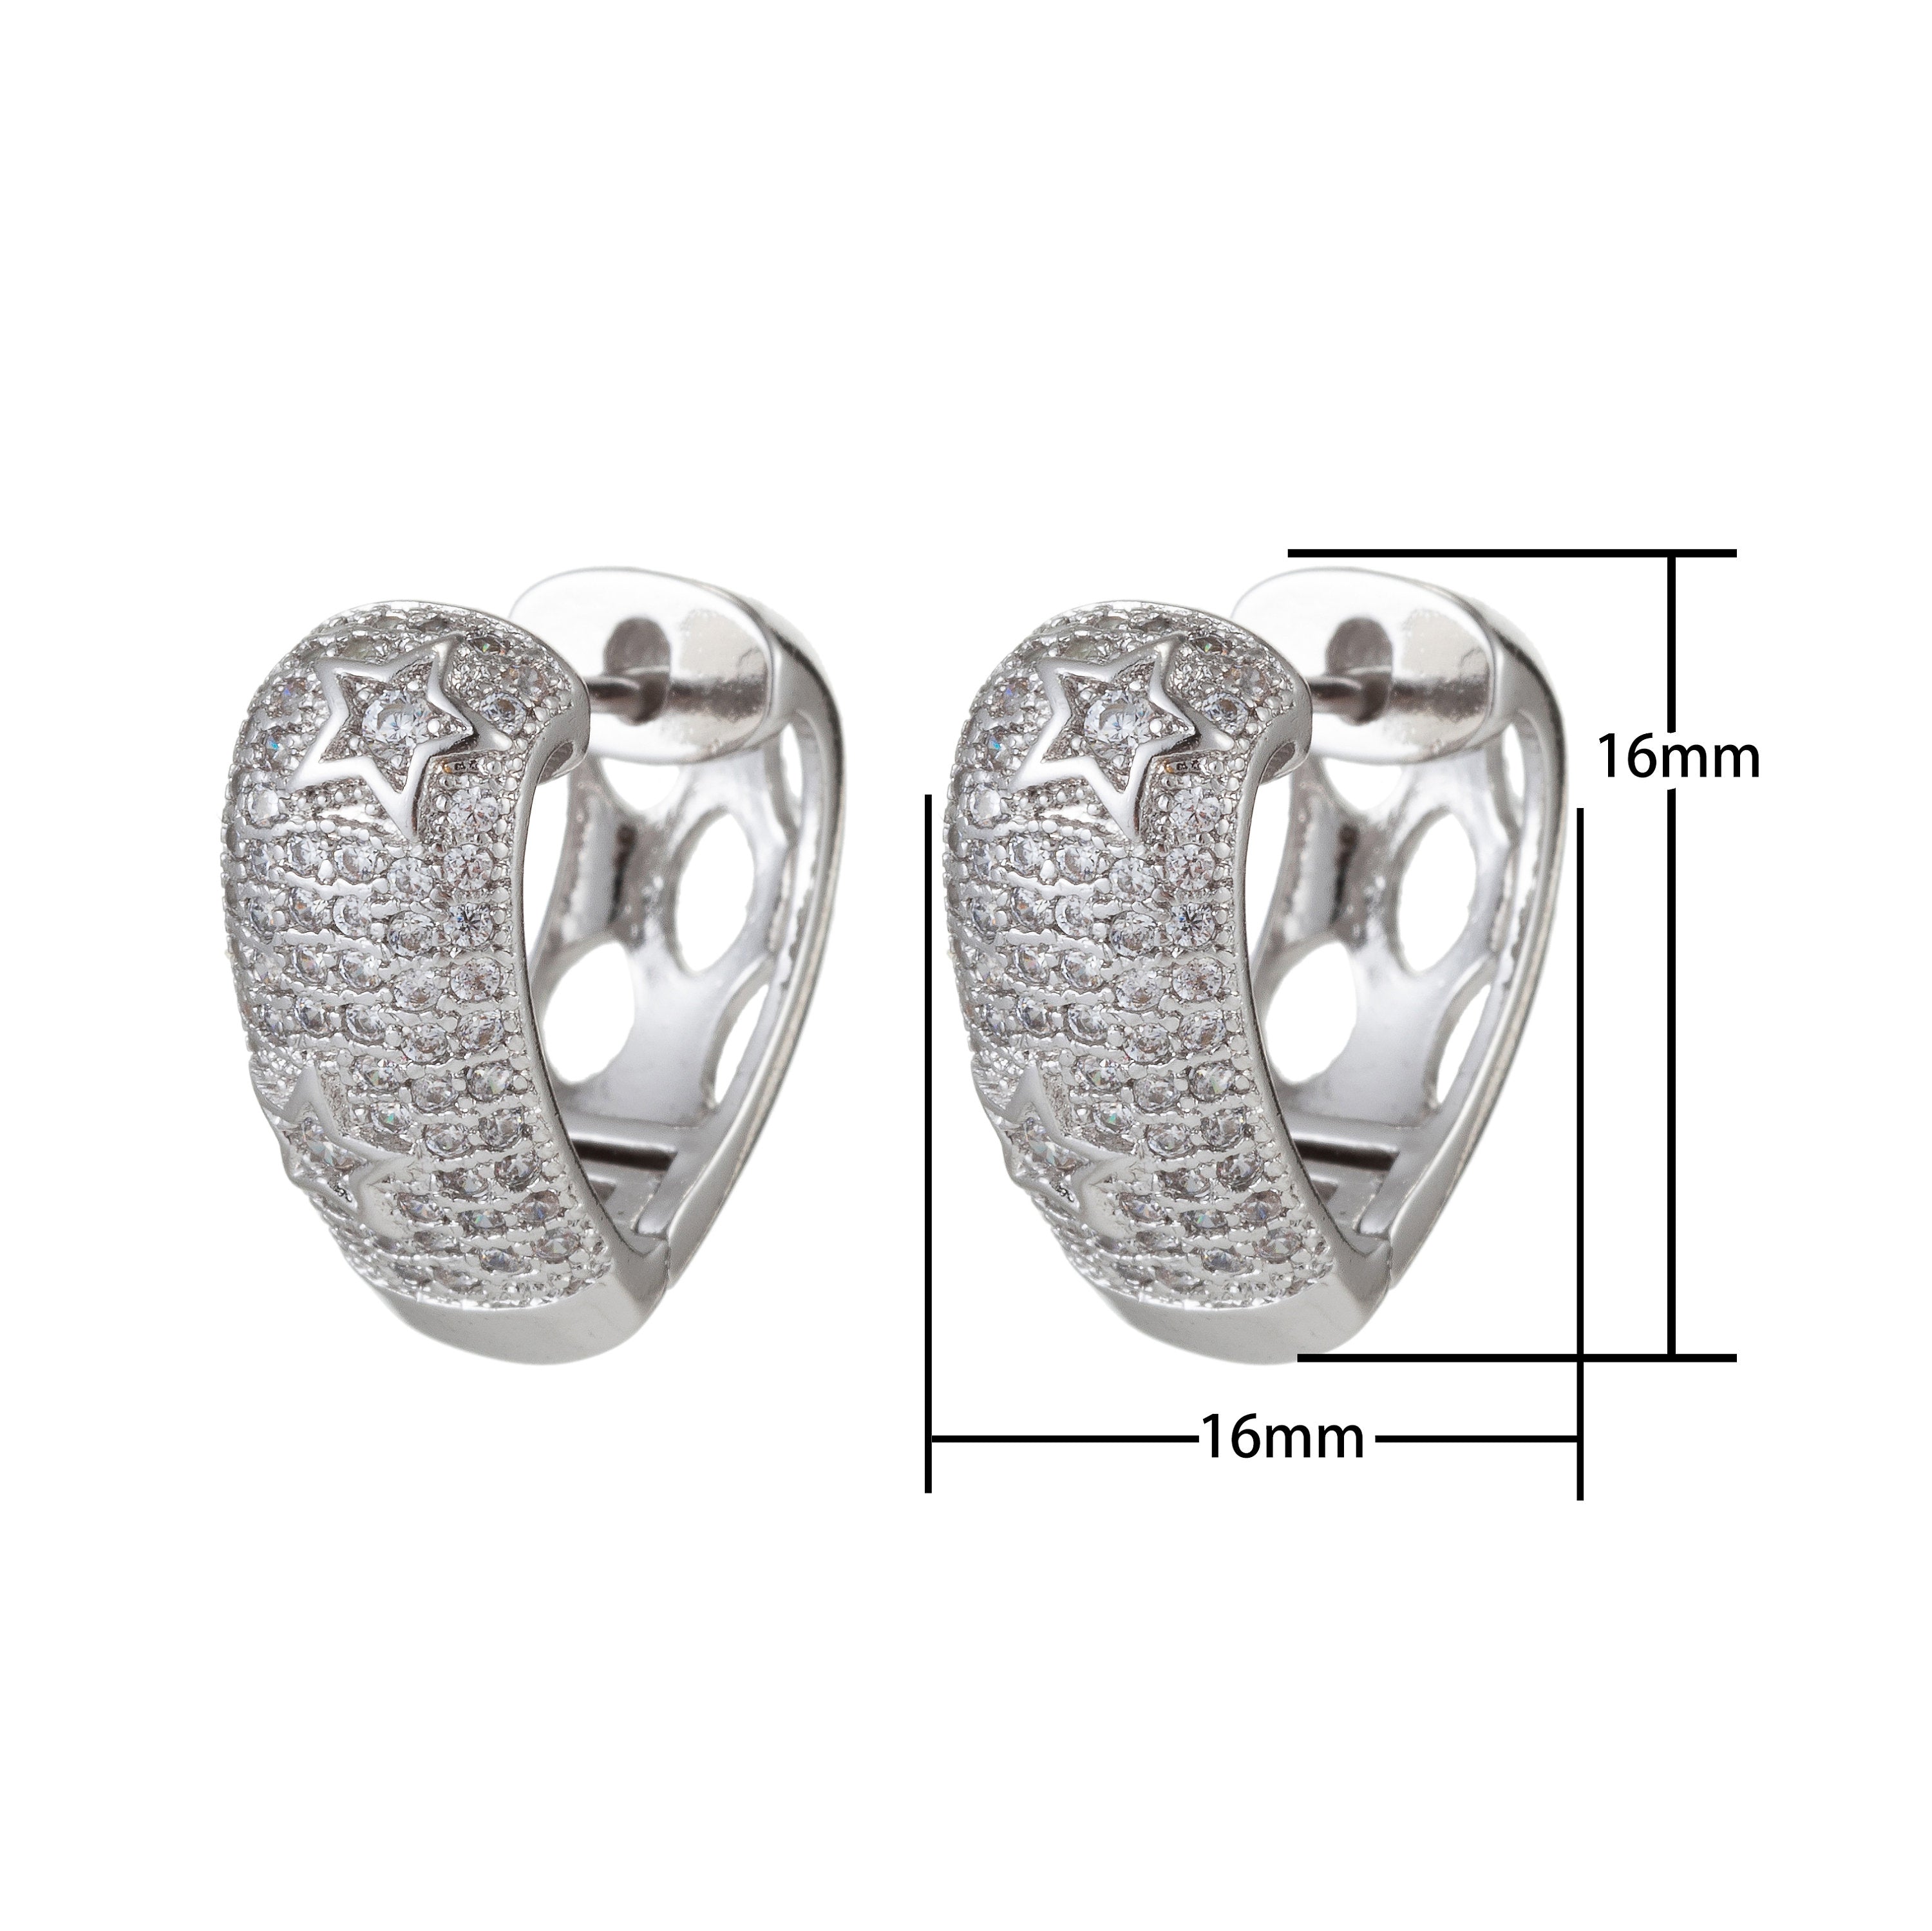 Micro Pave Star Huggie hoops, Gold Cubic zirconia small Hoops earrings, cz diamond stones, tiny dainty, EARRING-1022/23 - DLUXCA